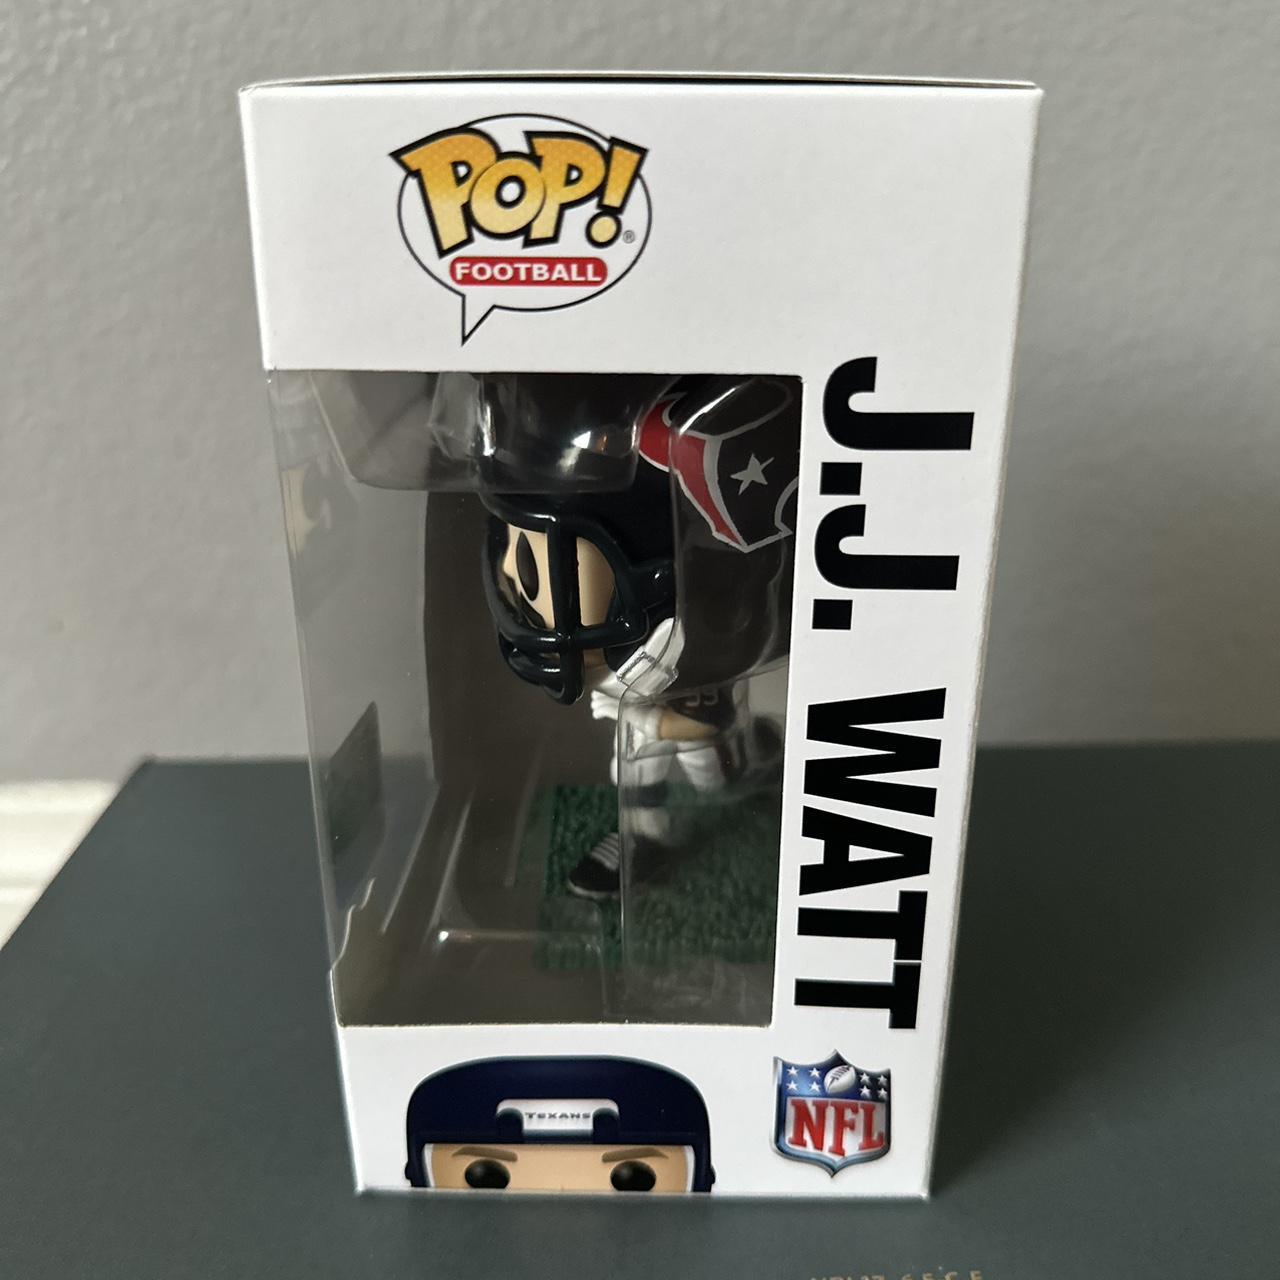 Funko Pop! NFL Football - J.J. Watt Houston Texans with Helmet #149